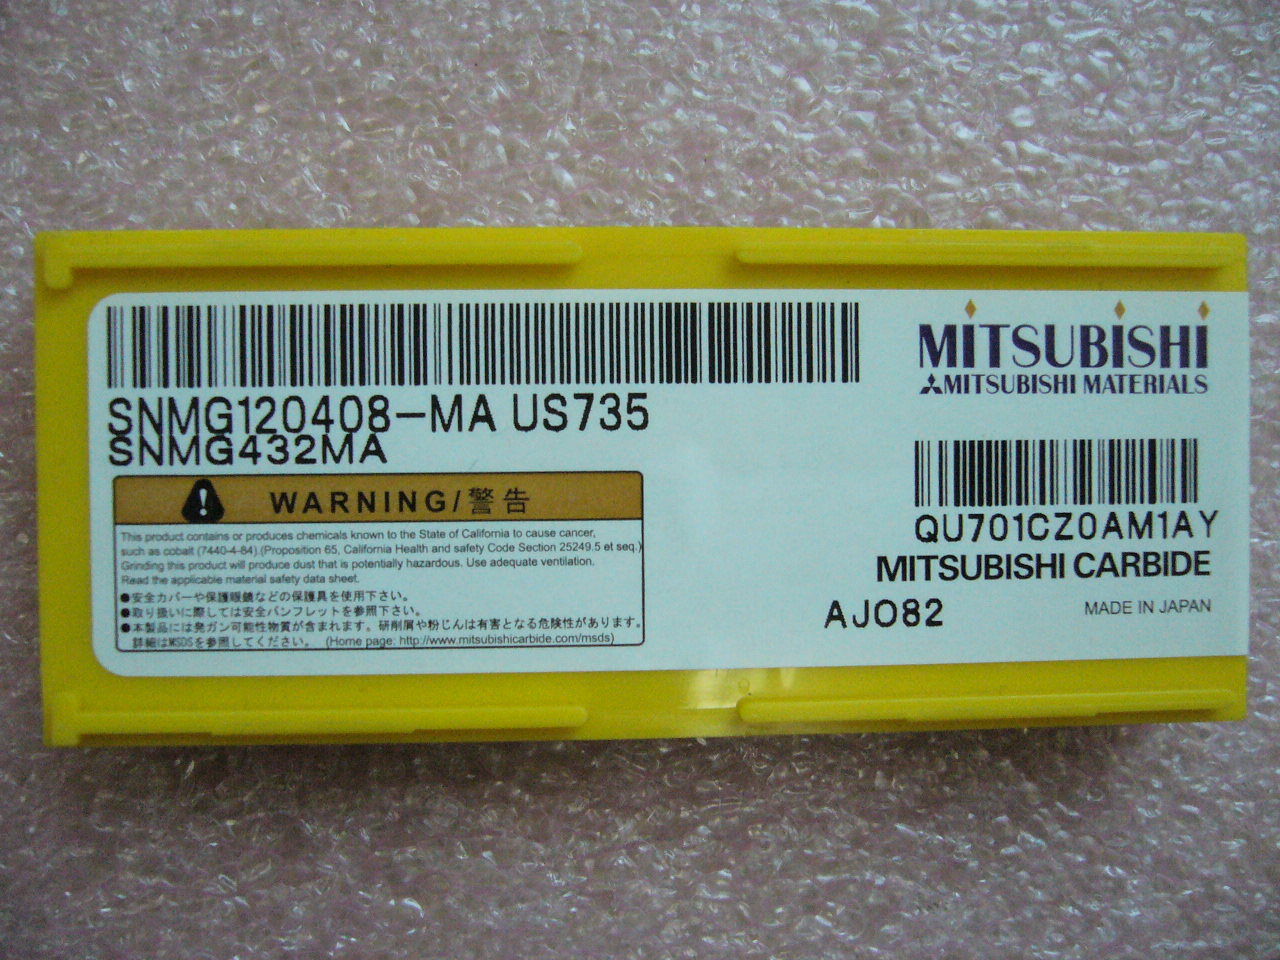 QTY 10x Mitsubishi SNMG432MA SNMG120408-MA US735 NEW